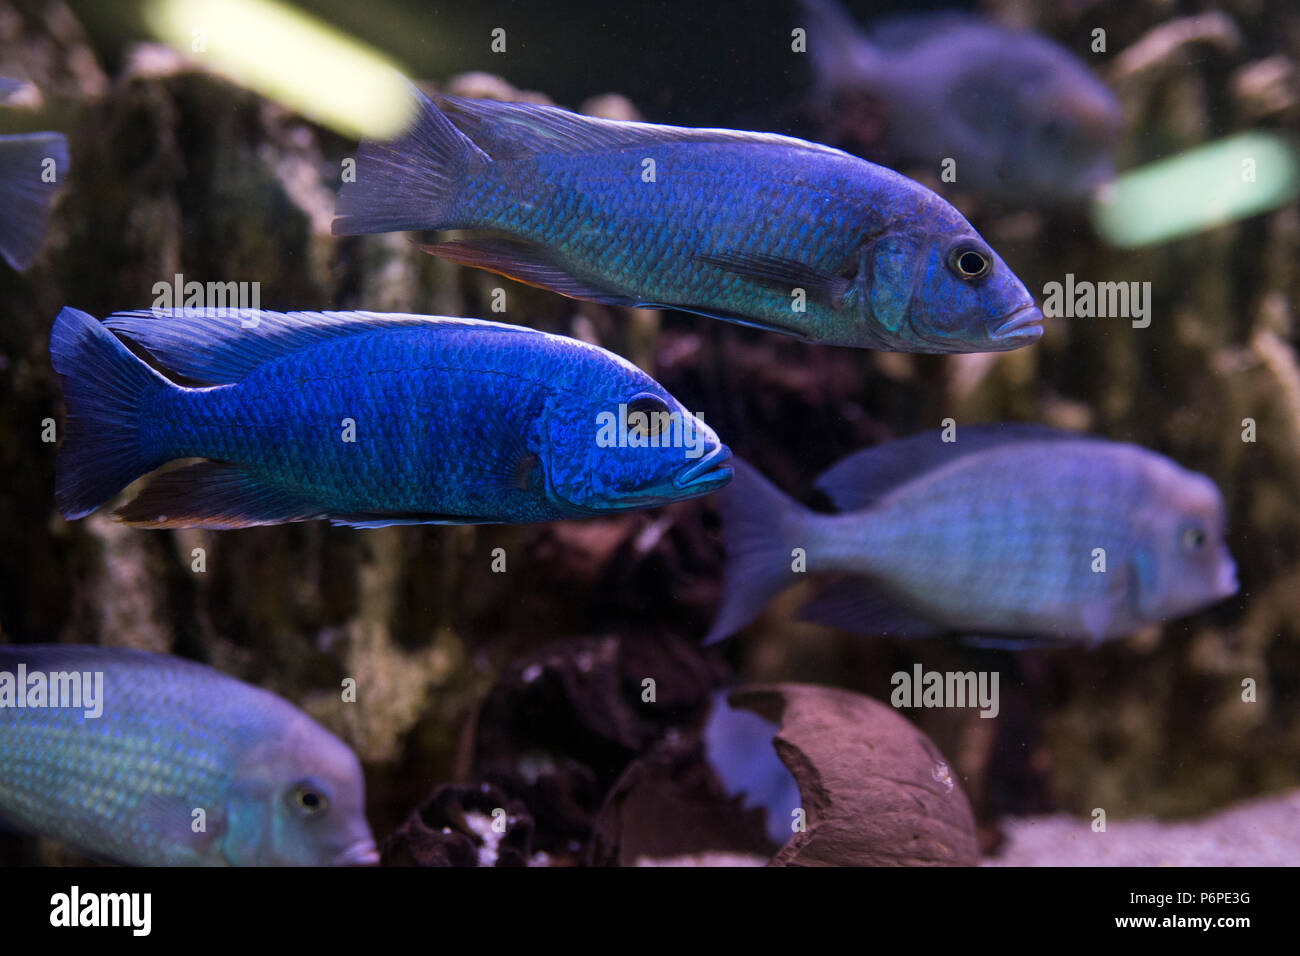 Malawi cichlids. Fish of the genus Cynotilapia in the aquarium. Stock Photo